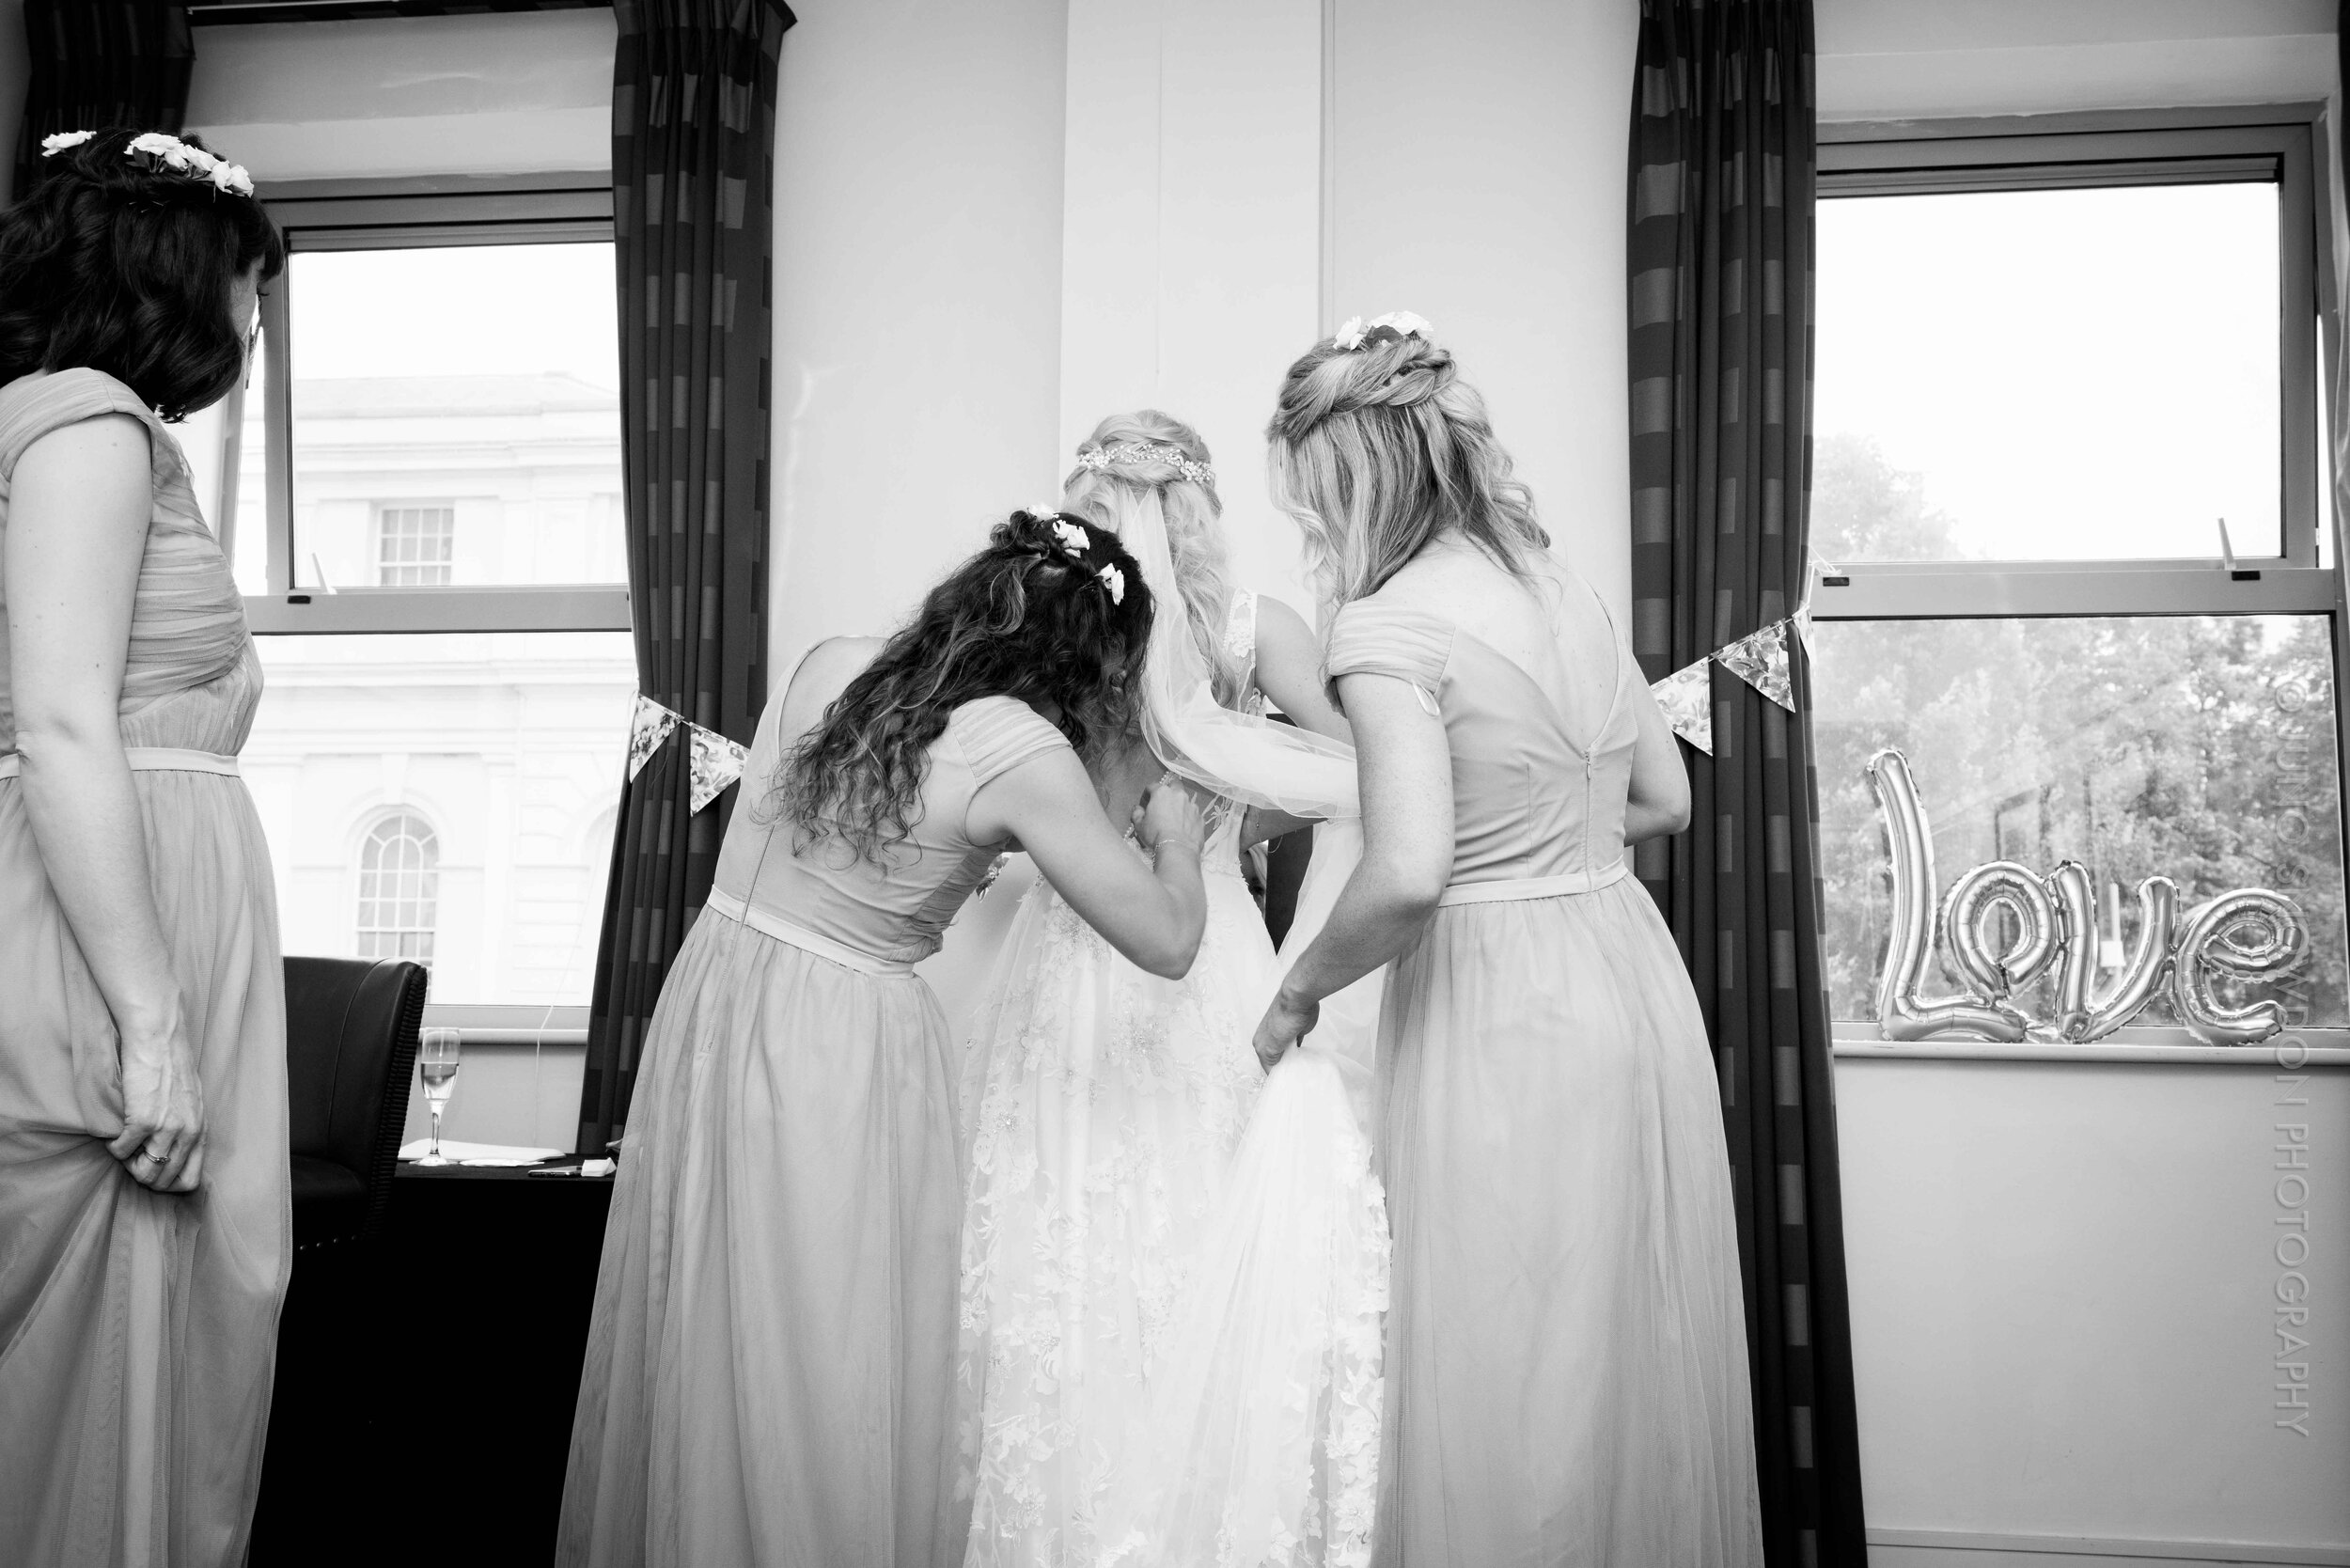 juno-snowdon-photography-wedding-queens-house-greenwich-0997.jpg